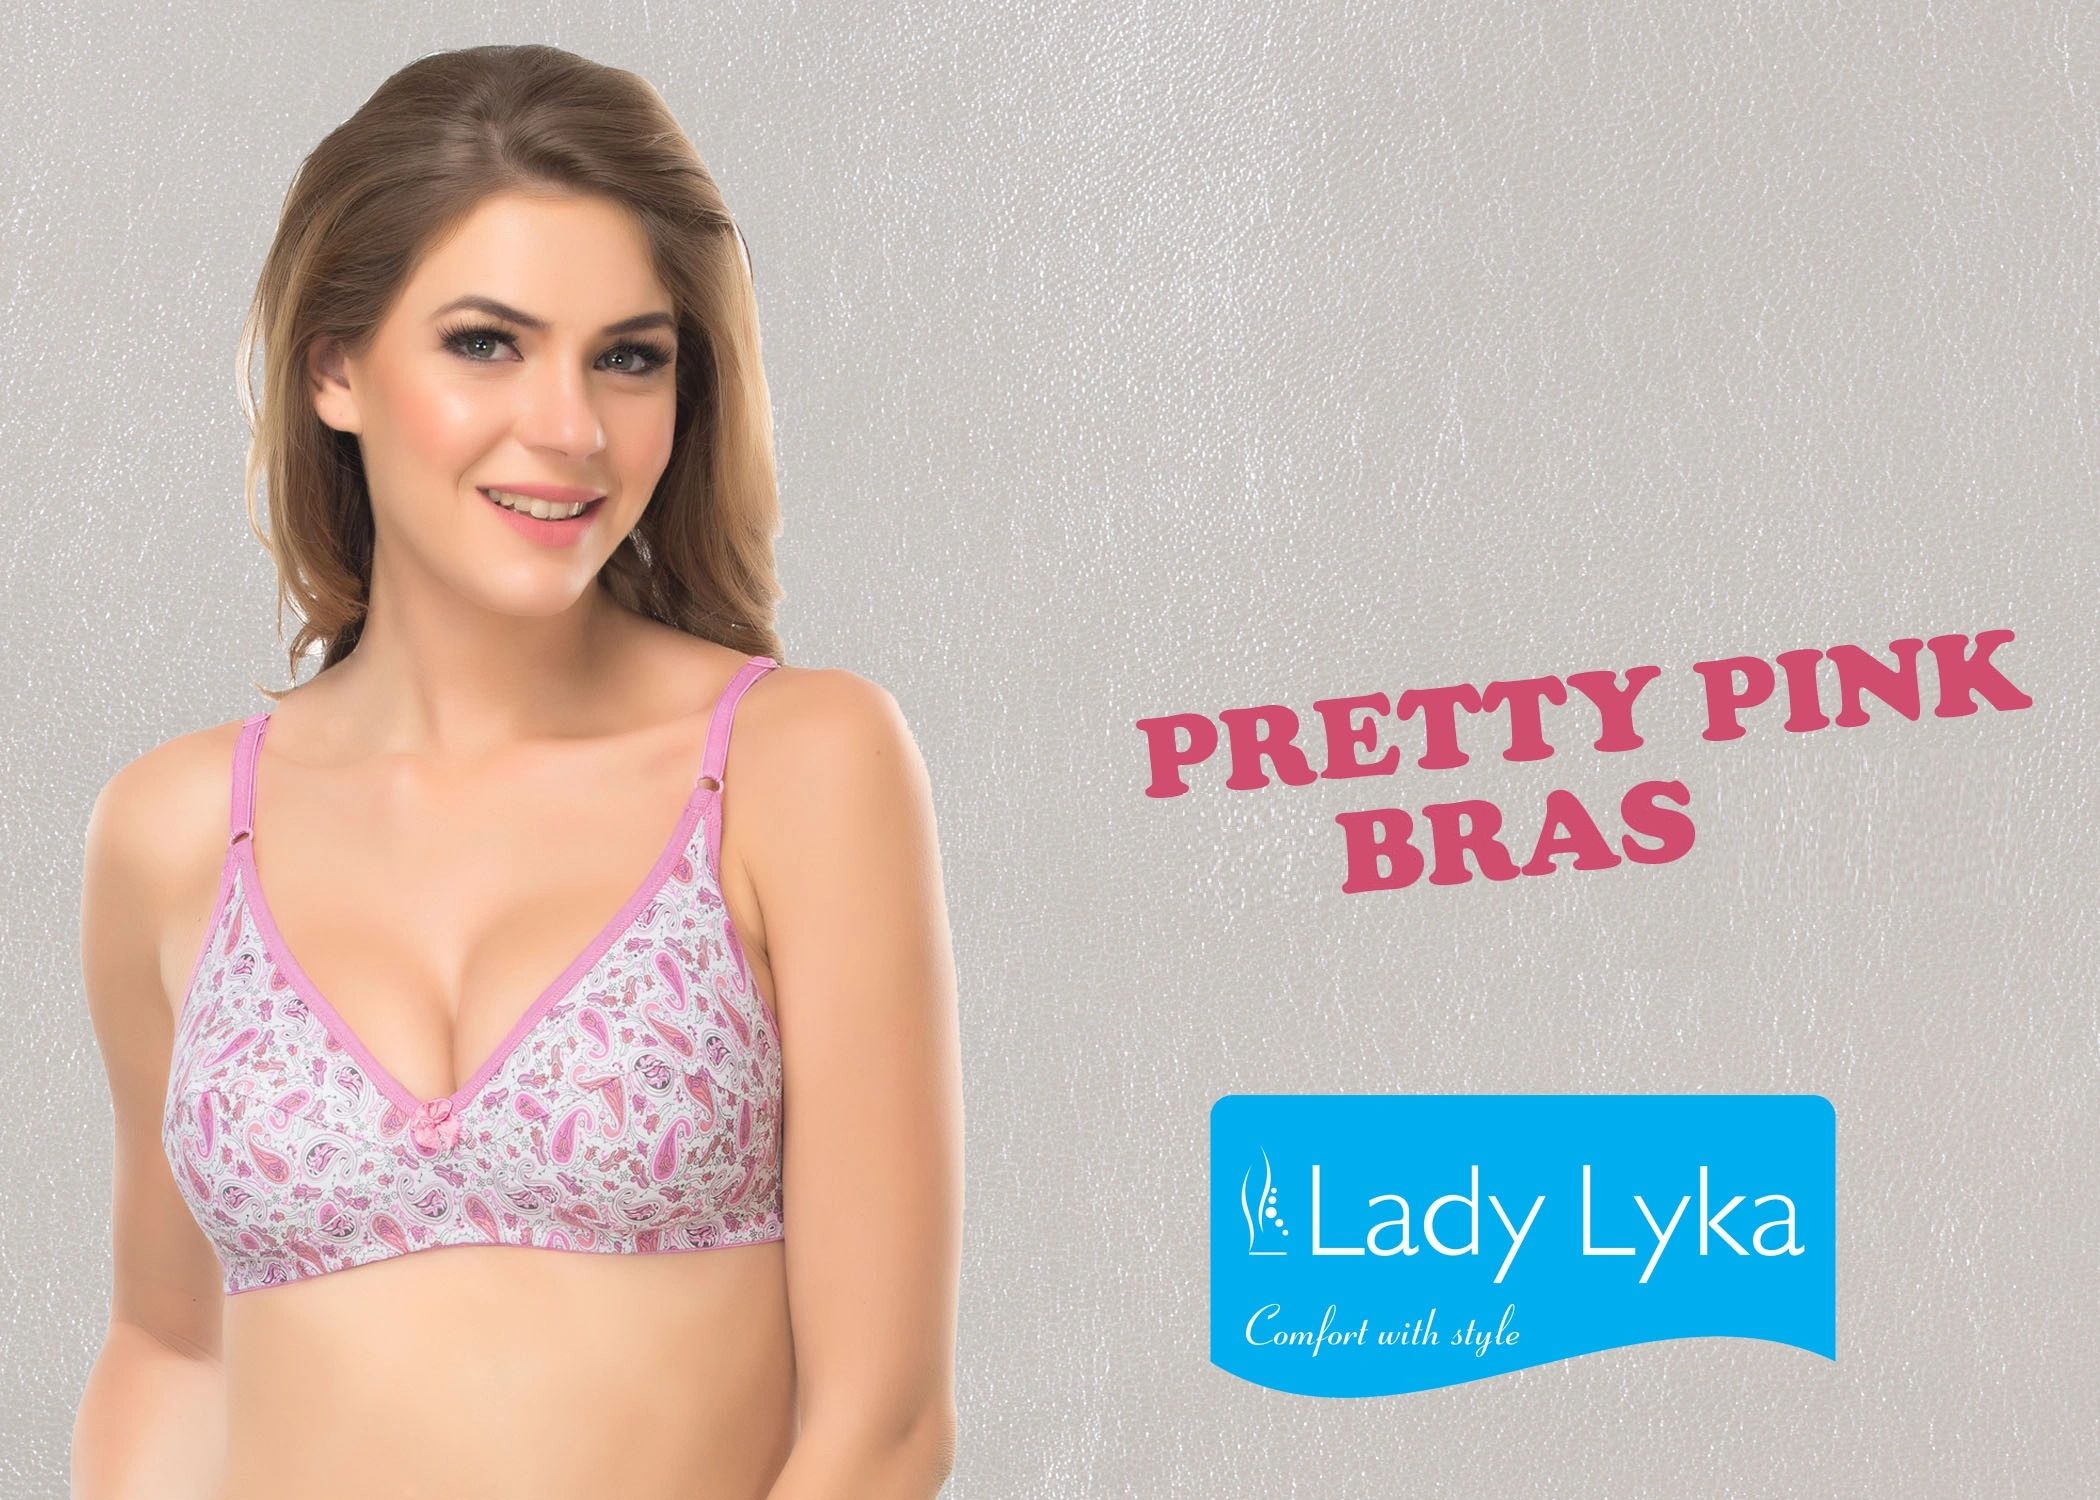 Lady Lyka - Lady Lyka presents of New Padded Bras Only at